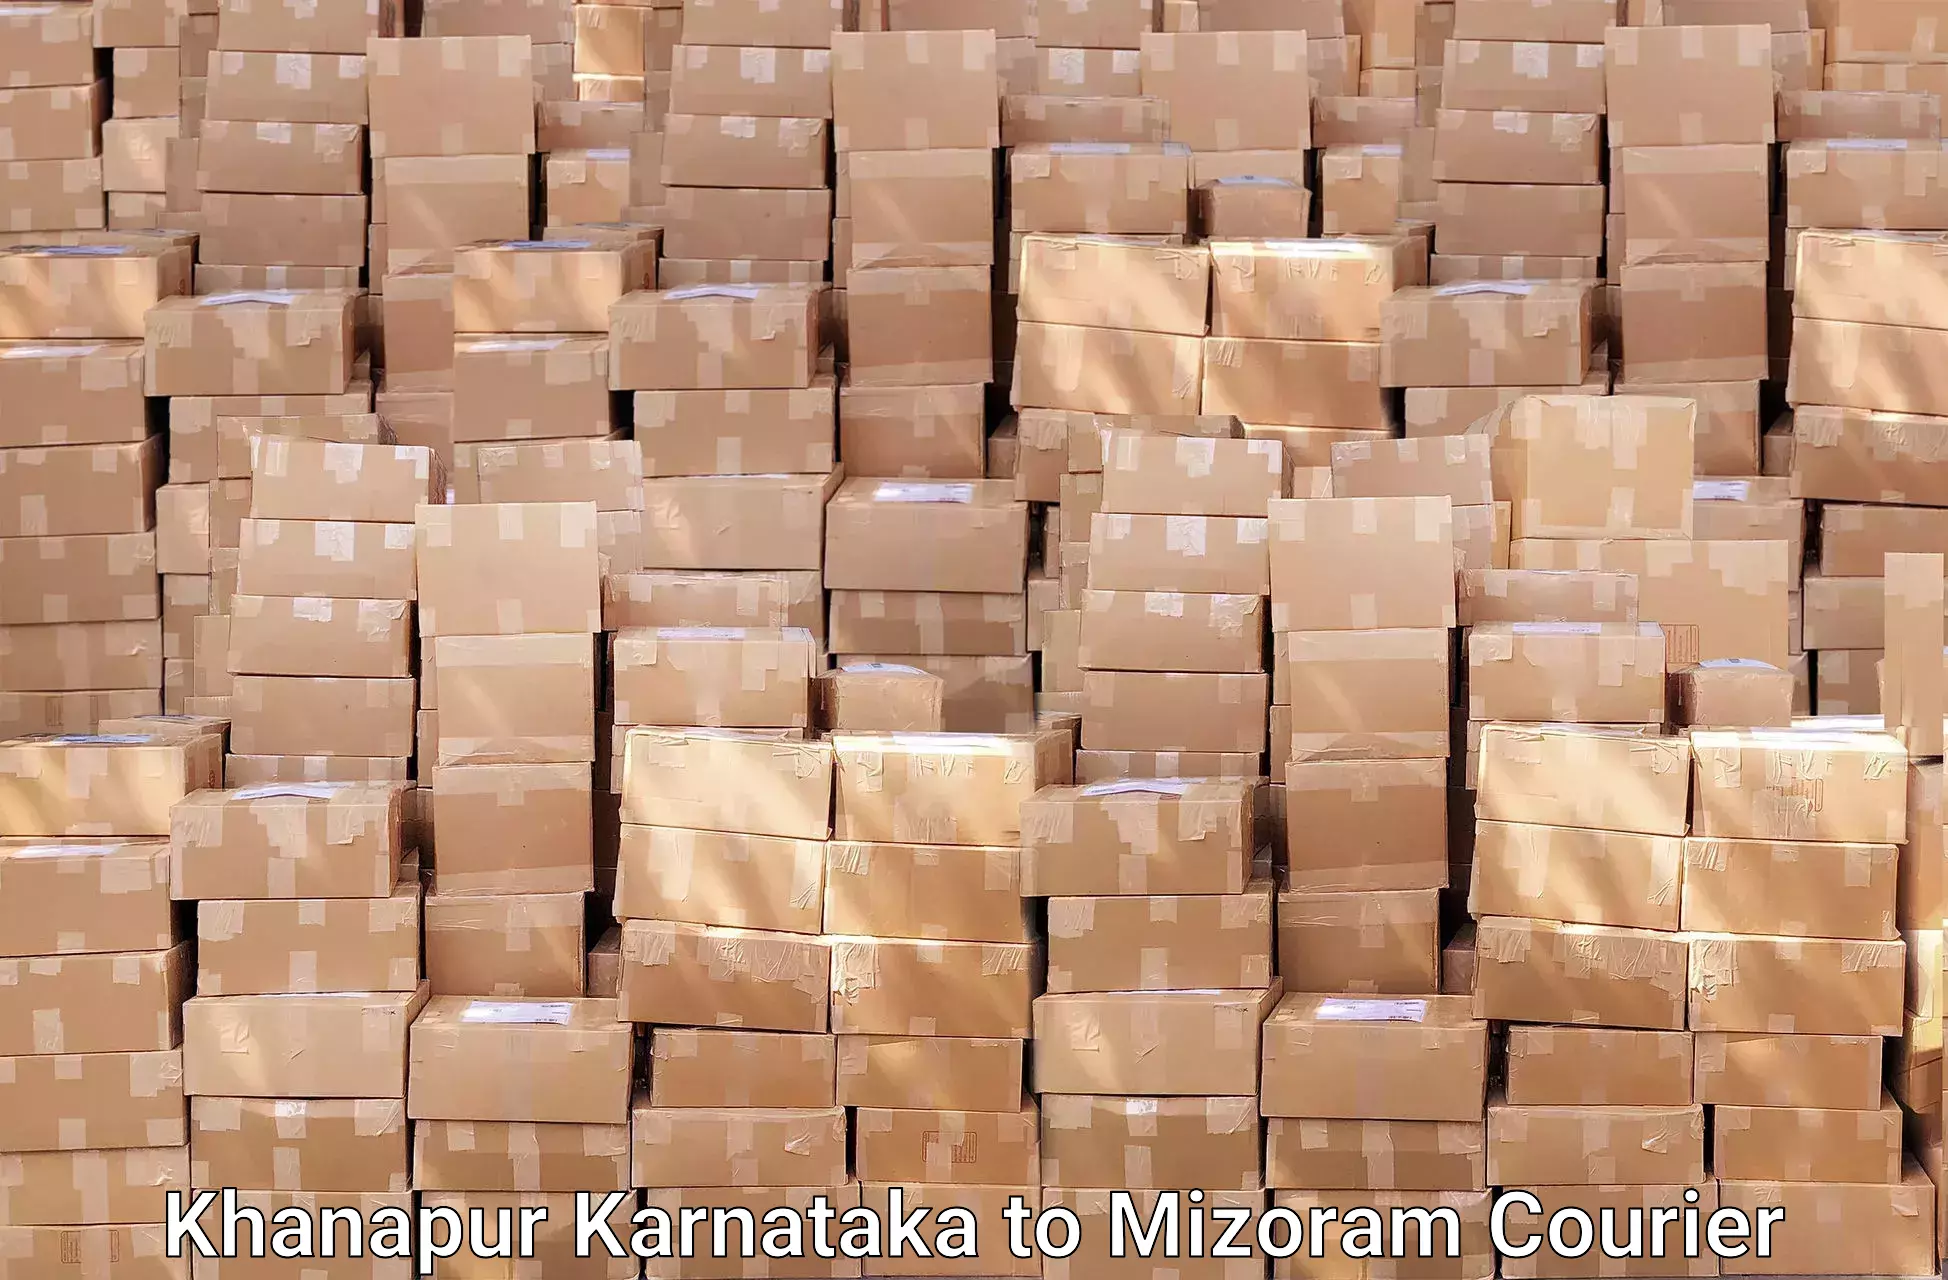 Professional moving assistance Khanapur Karnataka to Chawngte